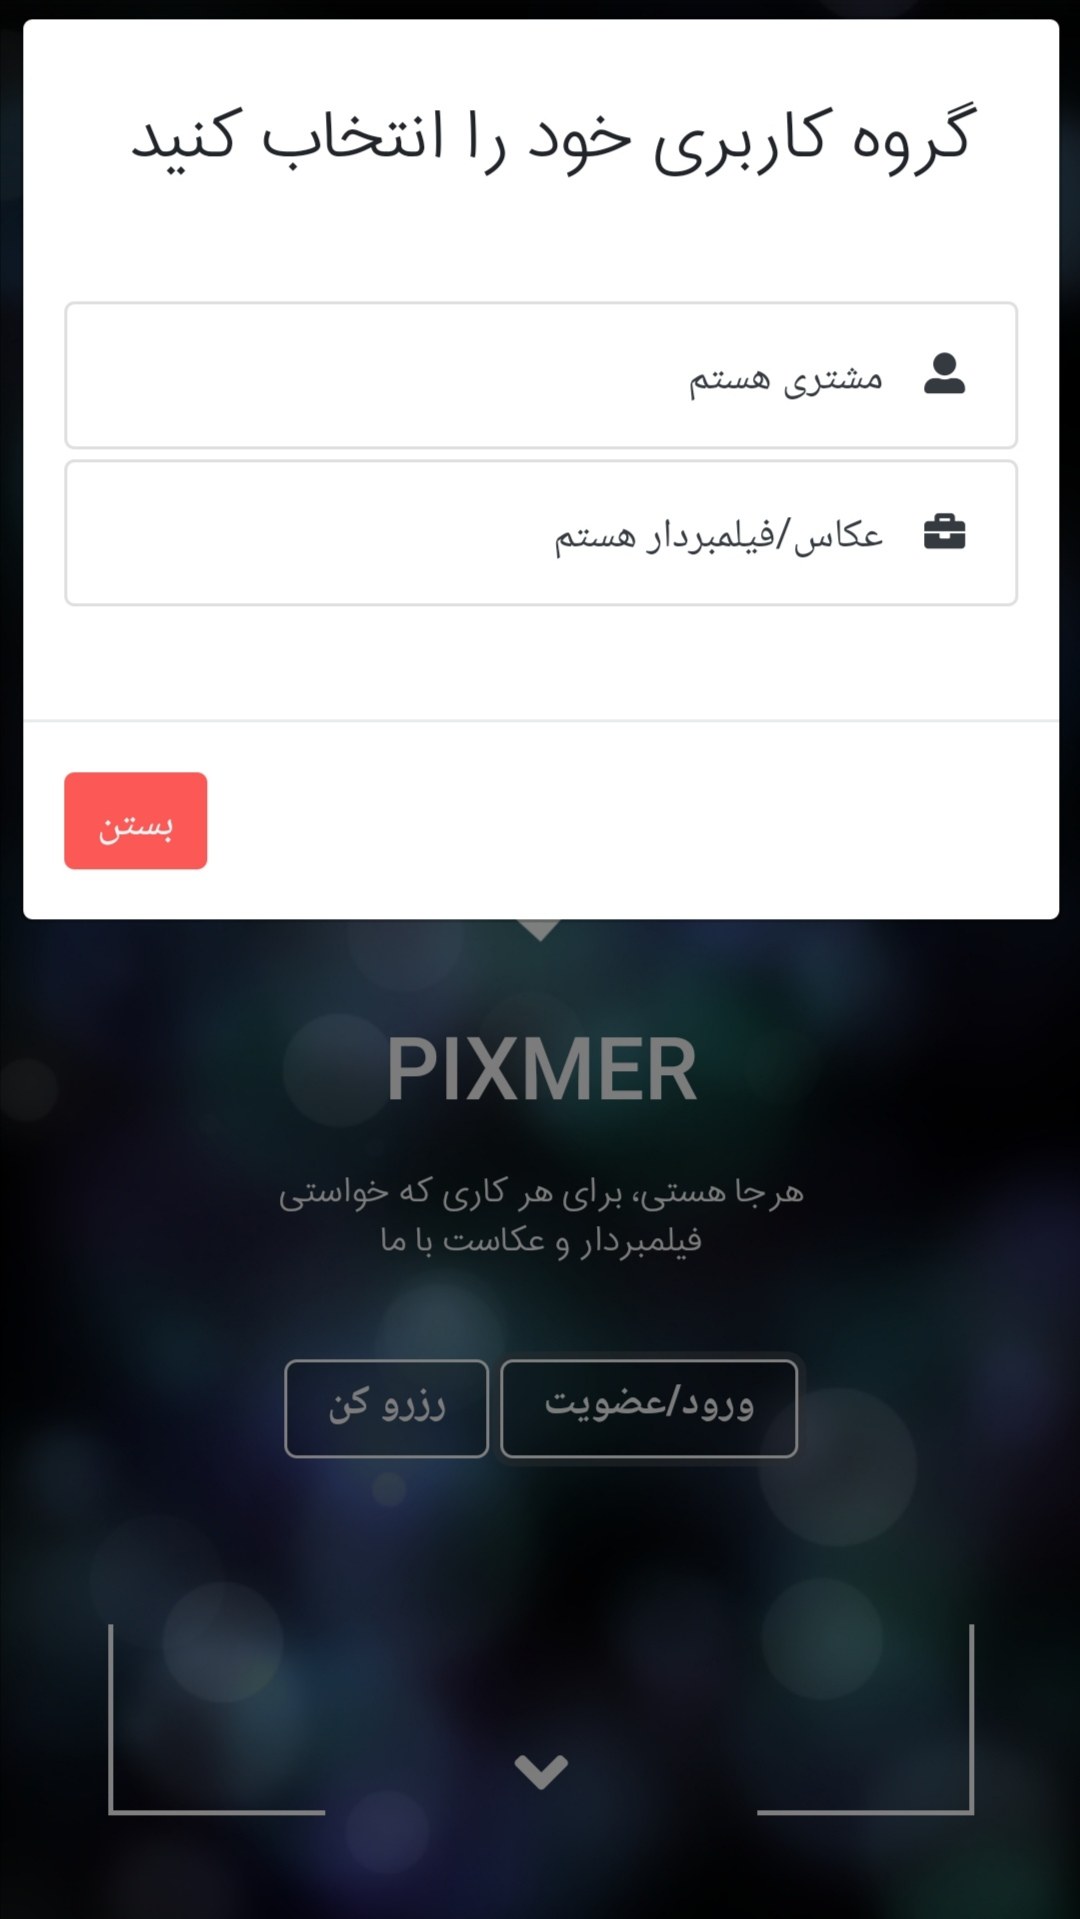 Pixmer